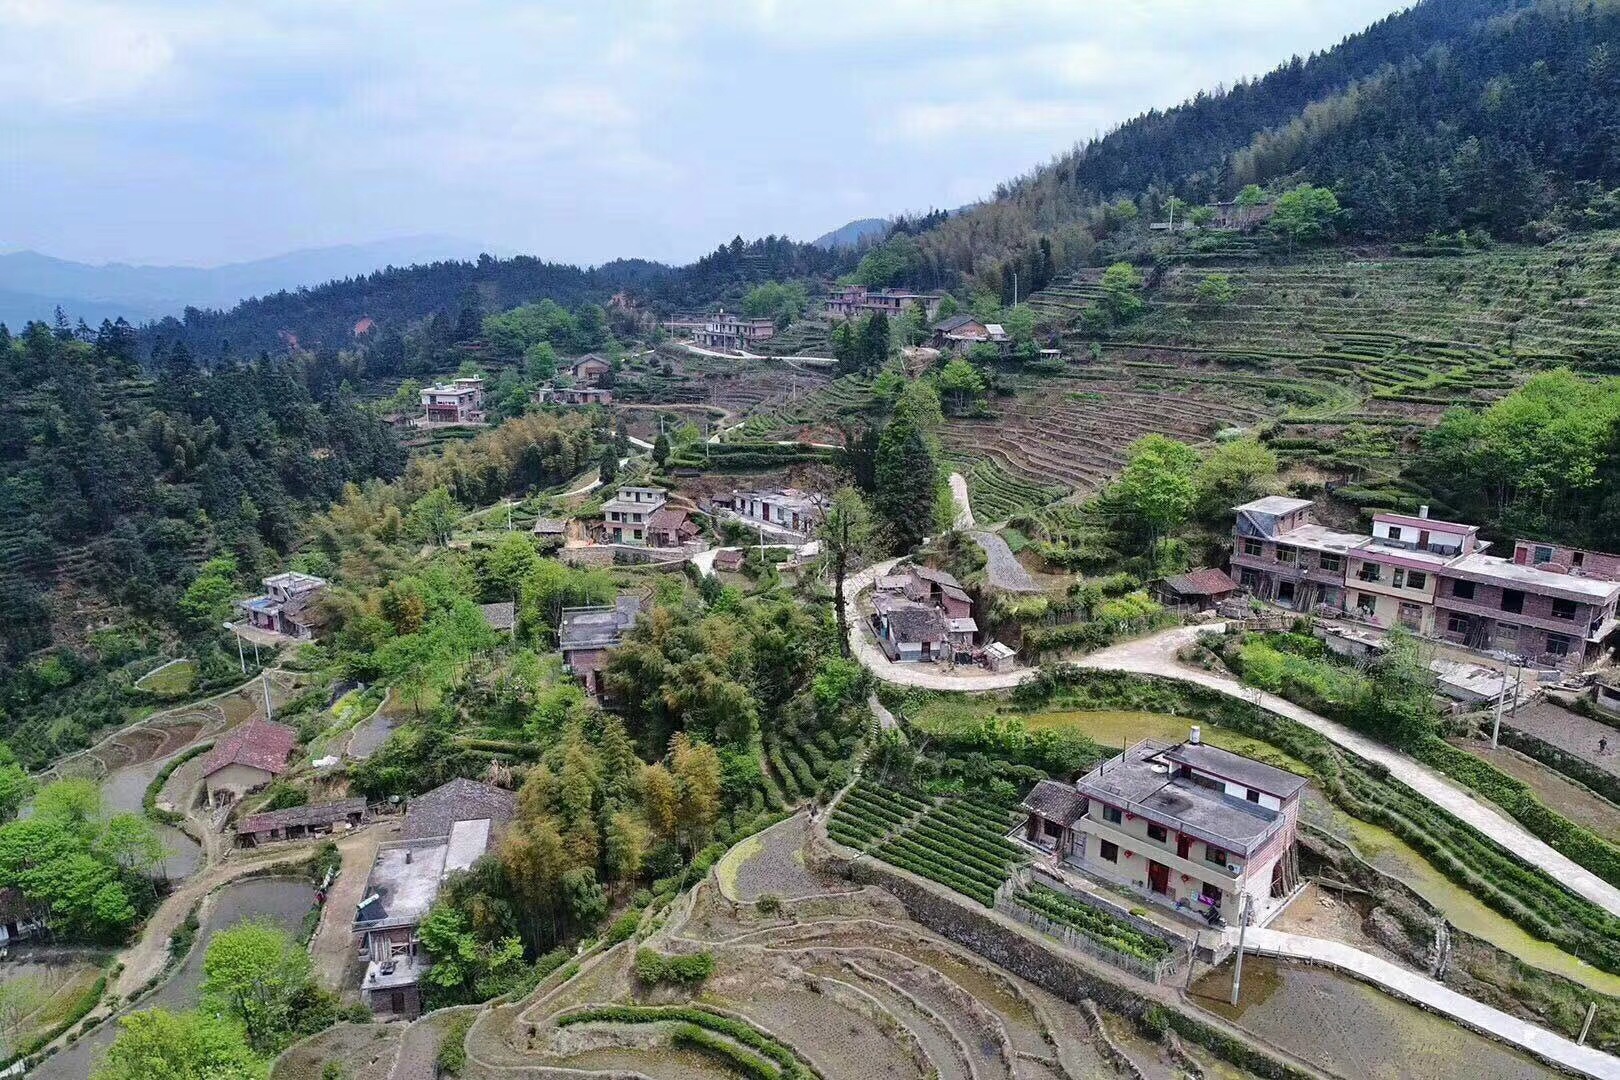 A Beautiful tea village in South Hunan